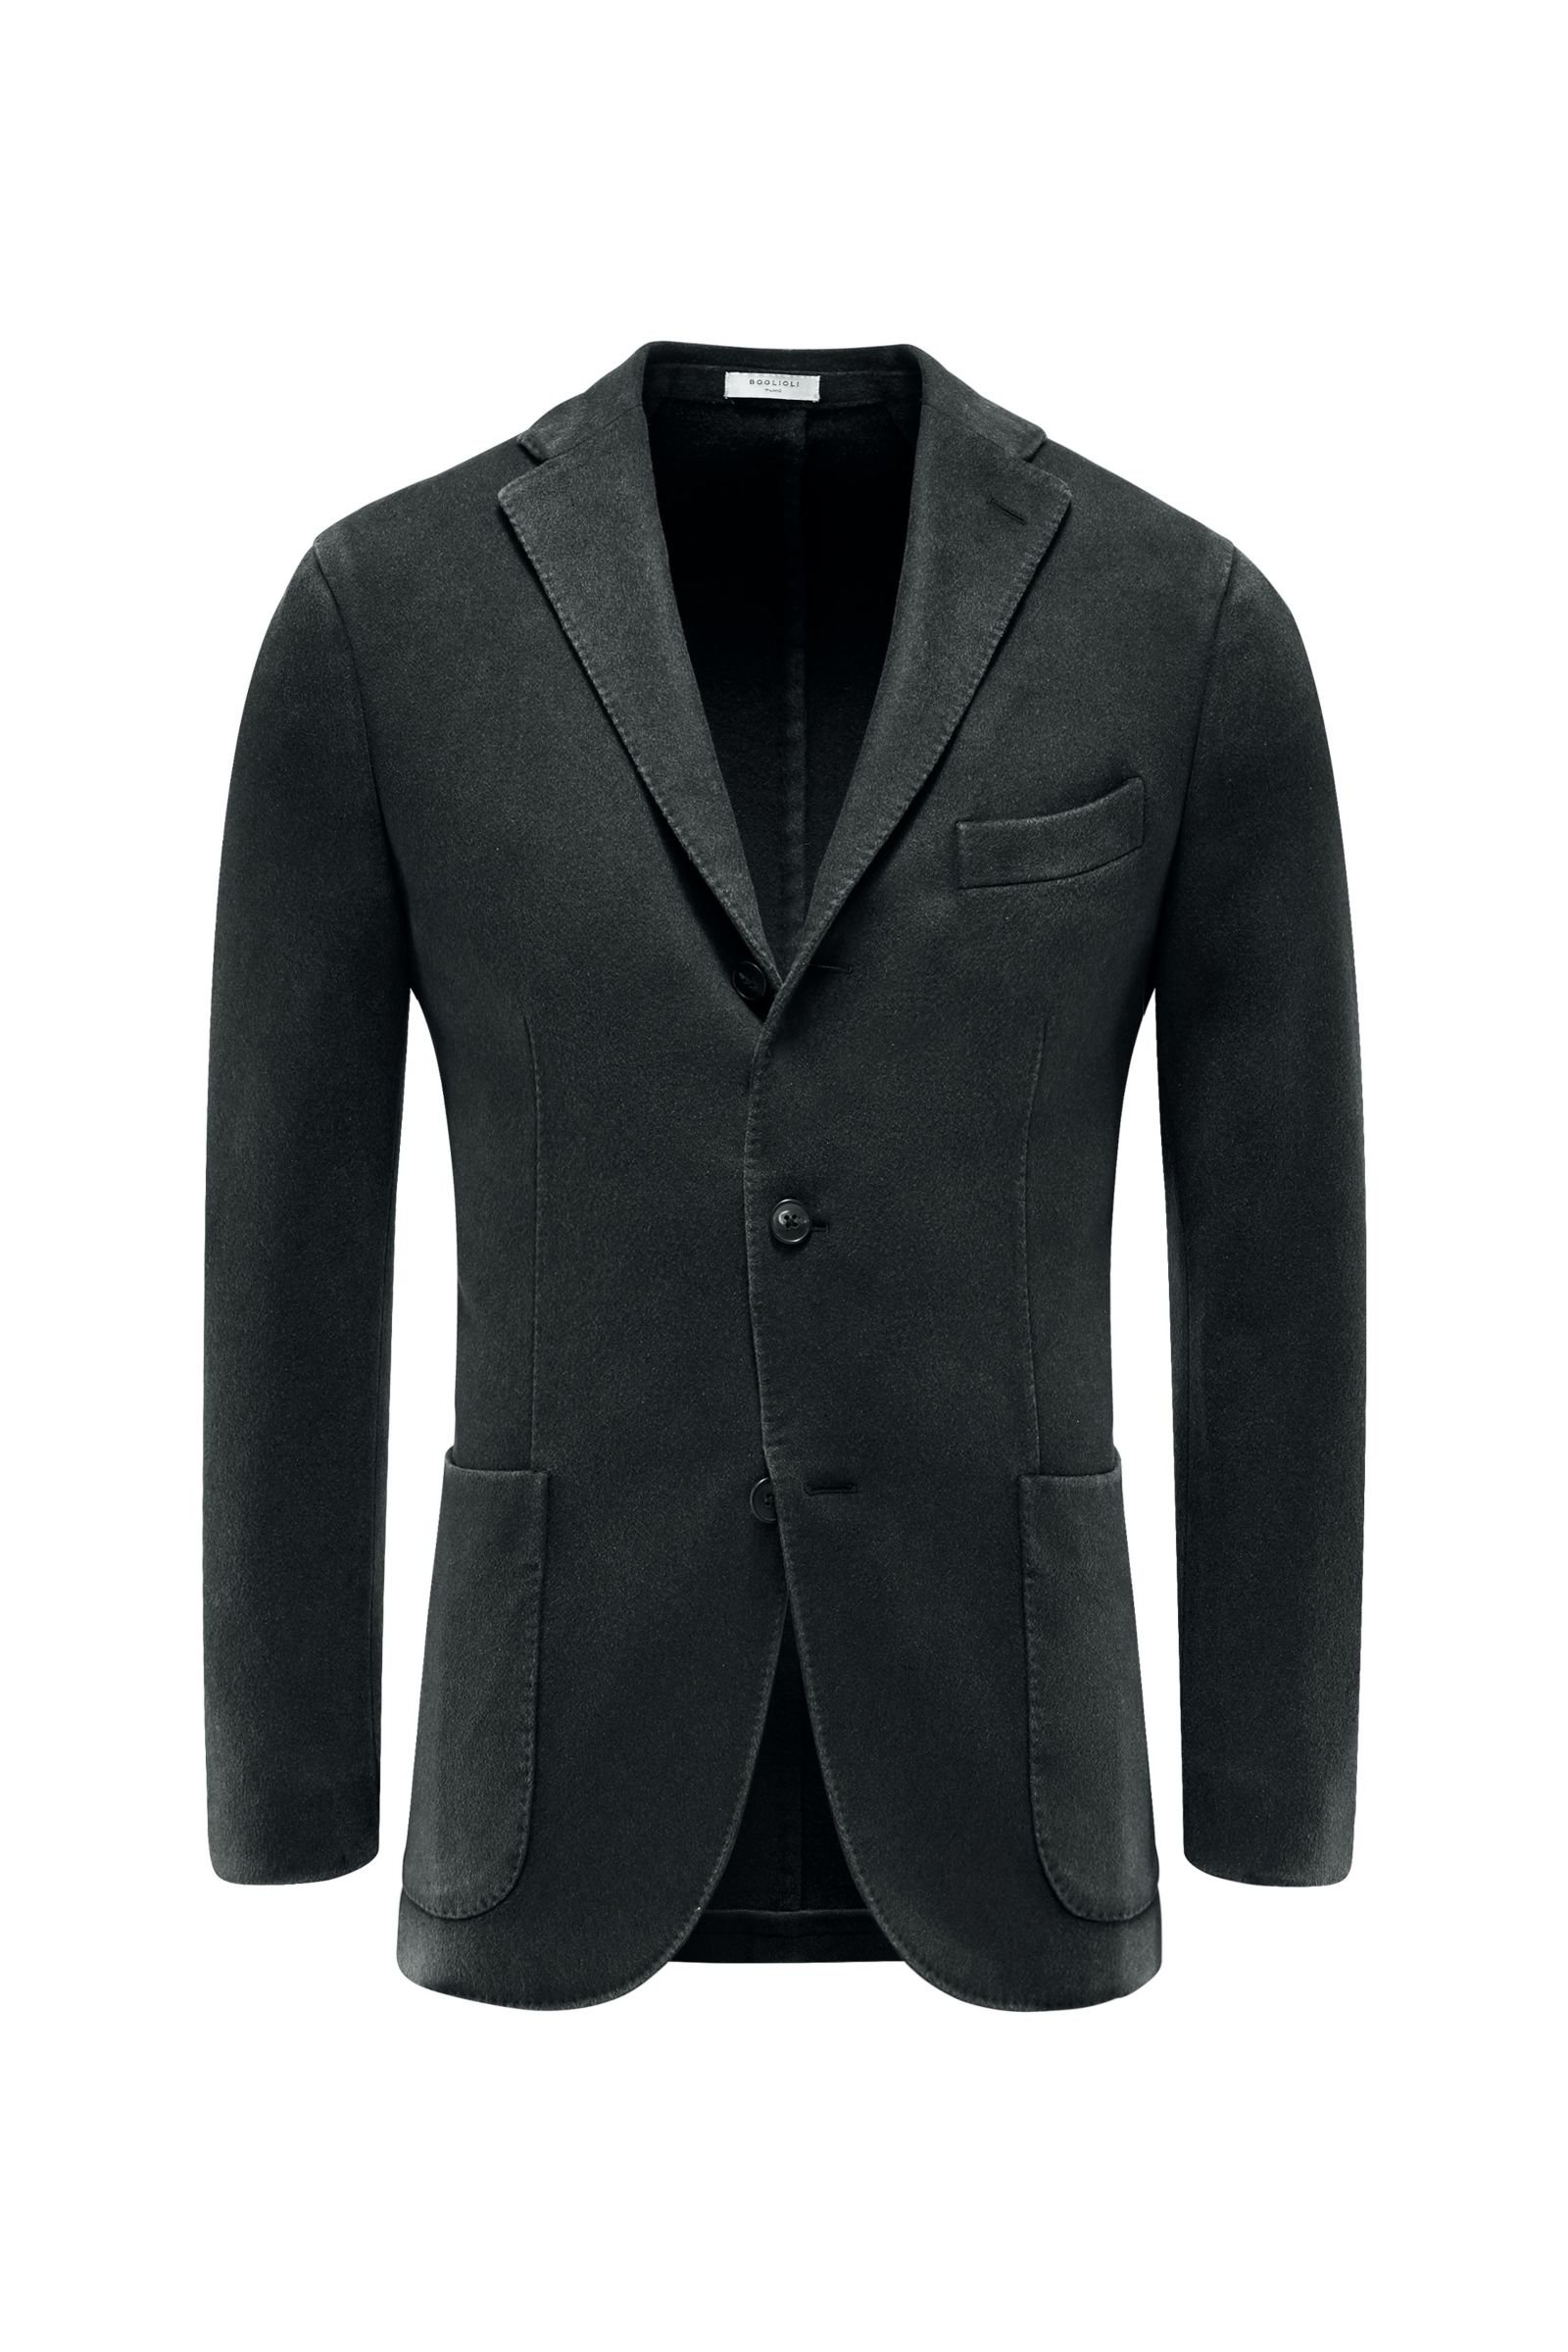 Cashmere smart-casual jacket dark grey